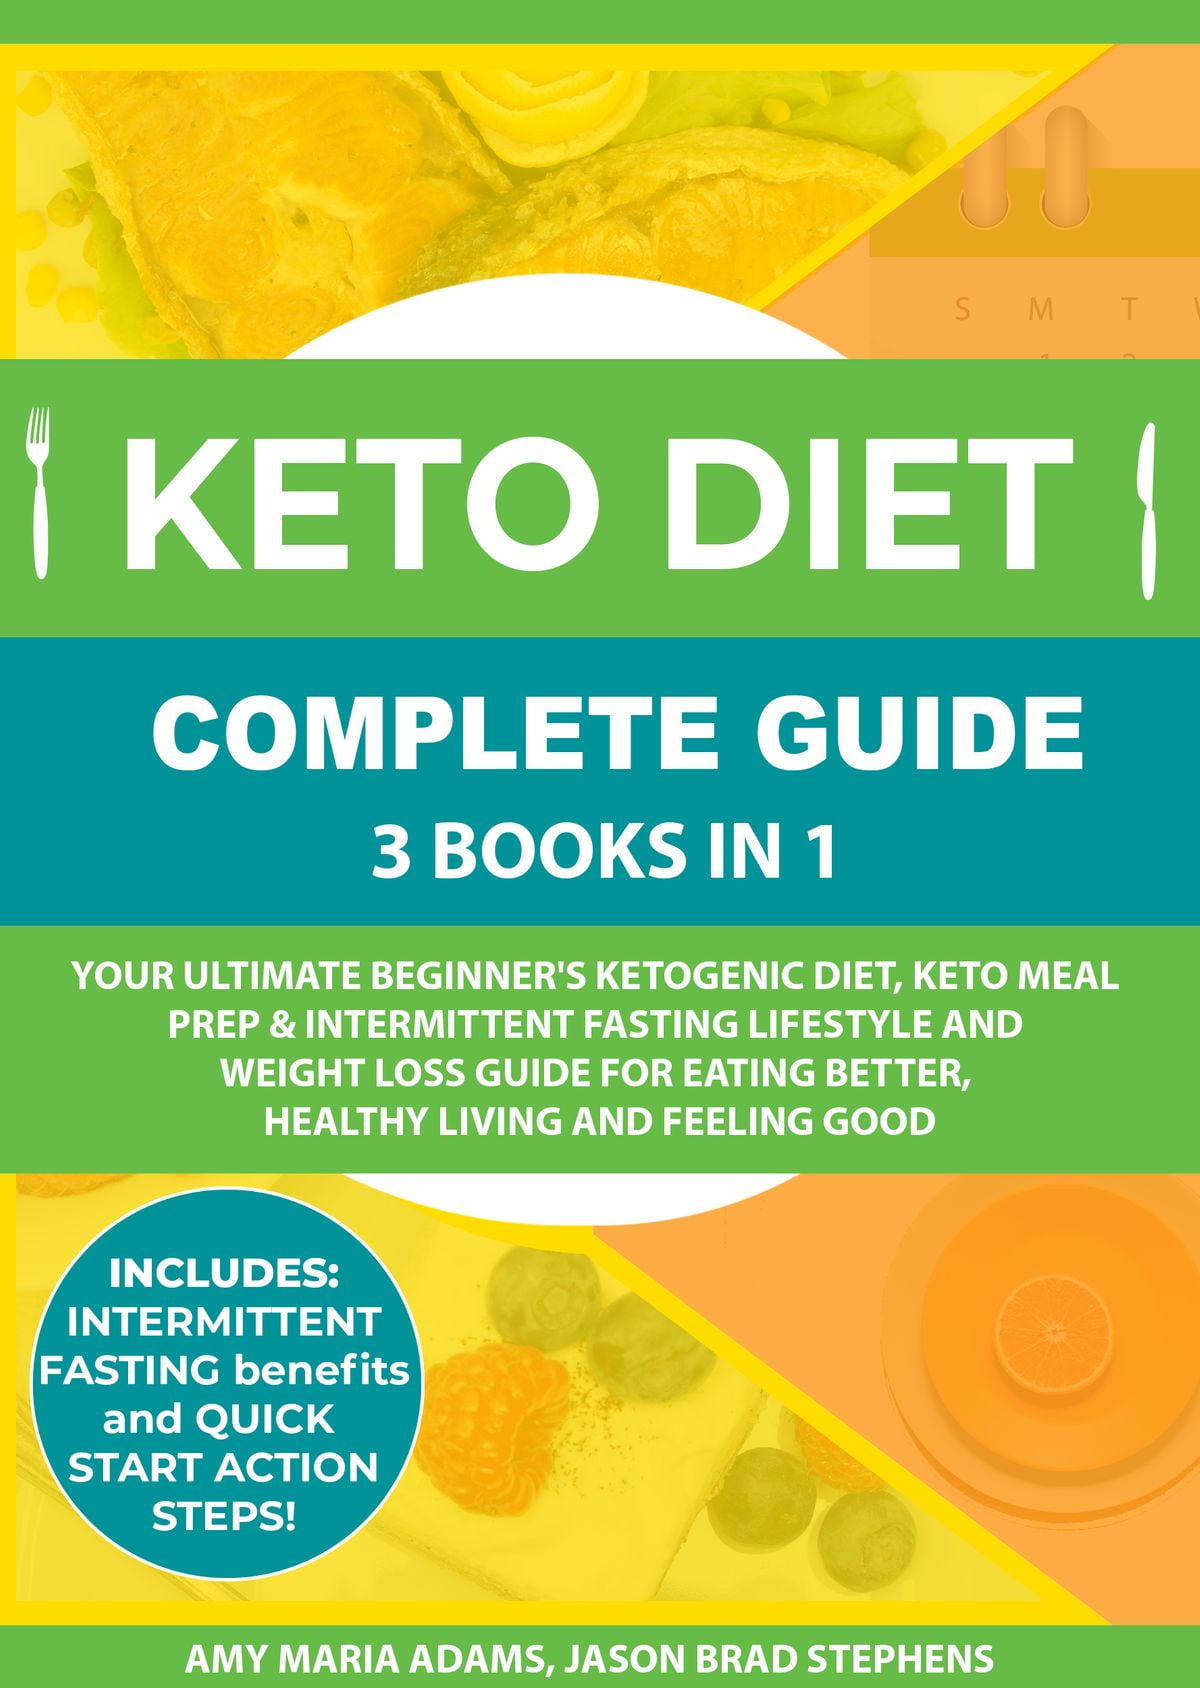 Keto Diet Complete Guide: 3 Books in 1 - eBook - Walmart.com - Walmart.com